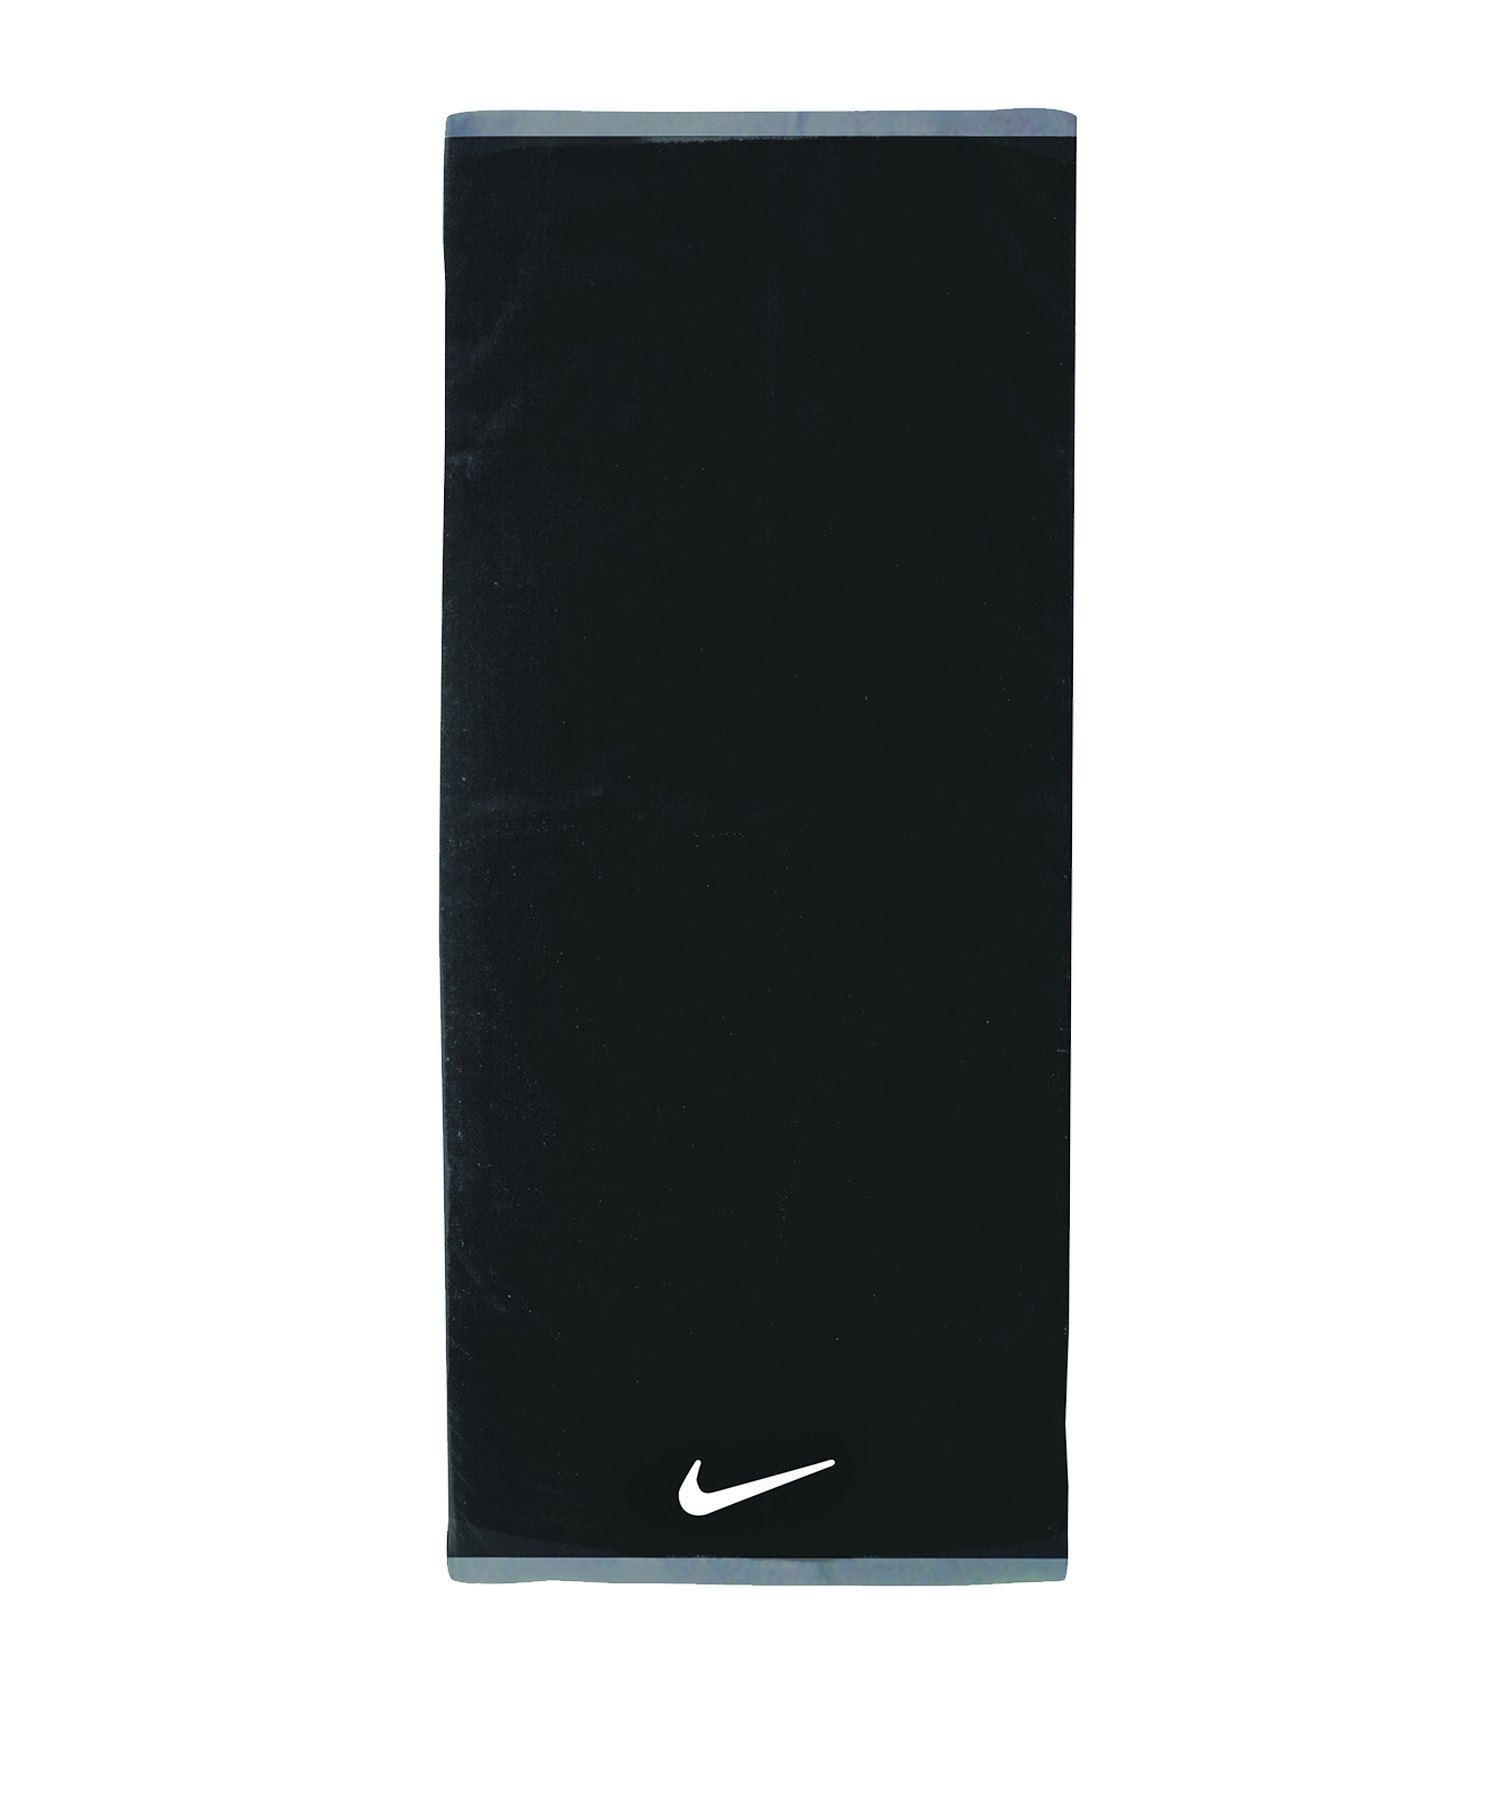 Nike Fundamental Towel Handtuch Schwarz Weiss F010 - schwarz